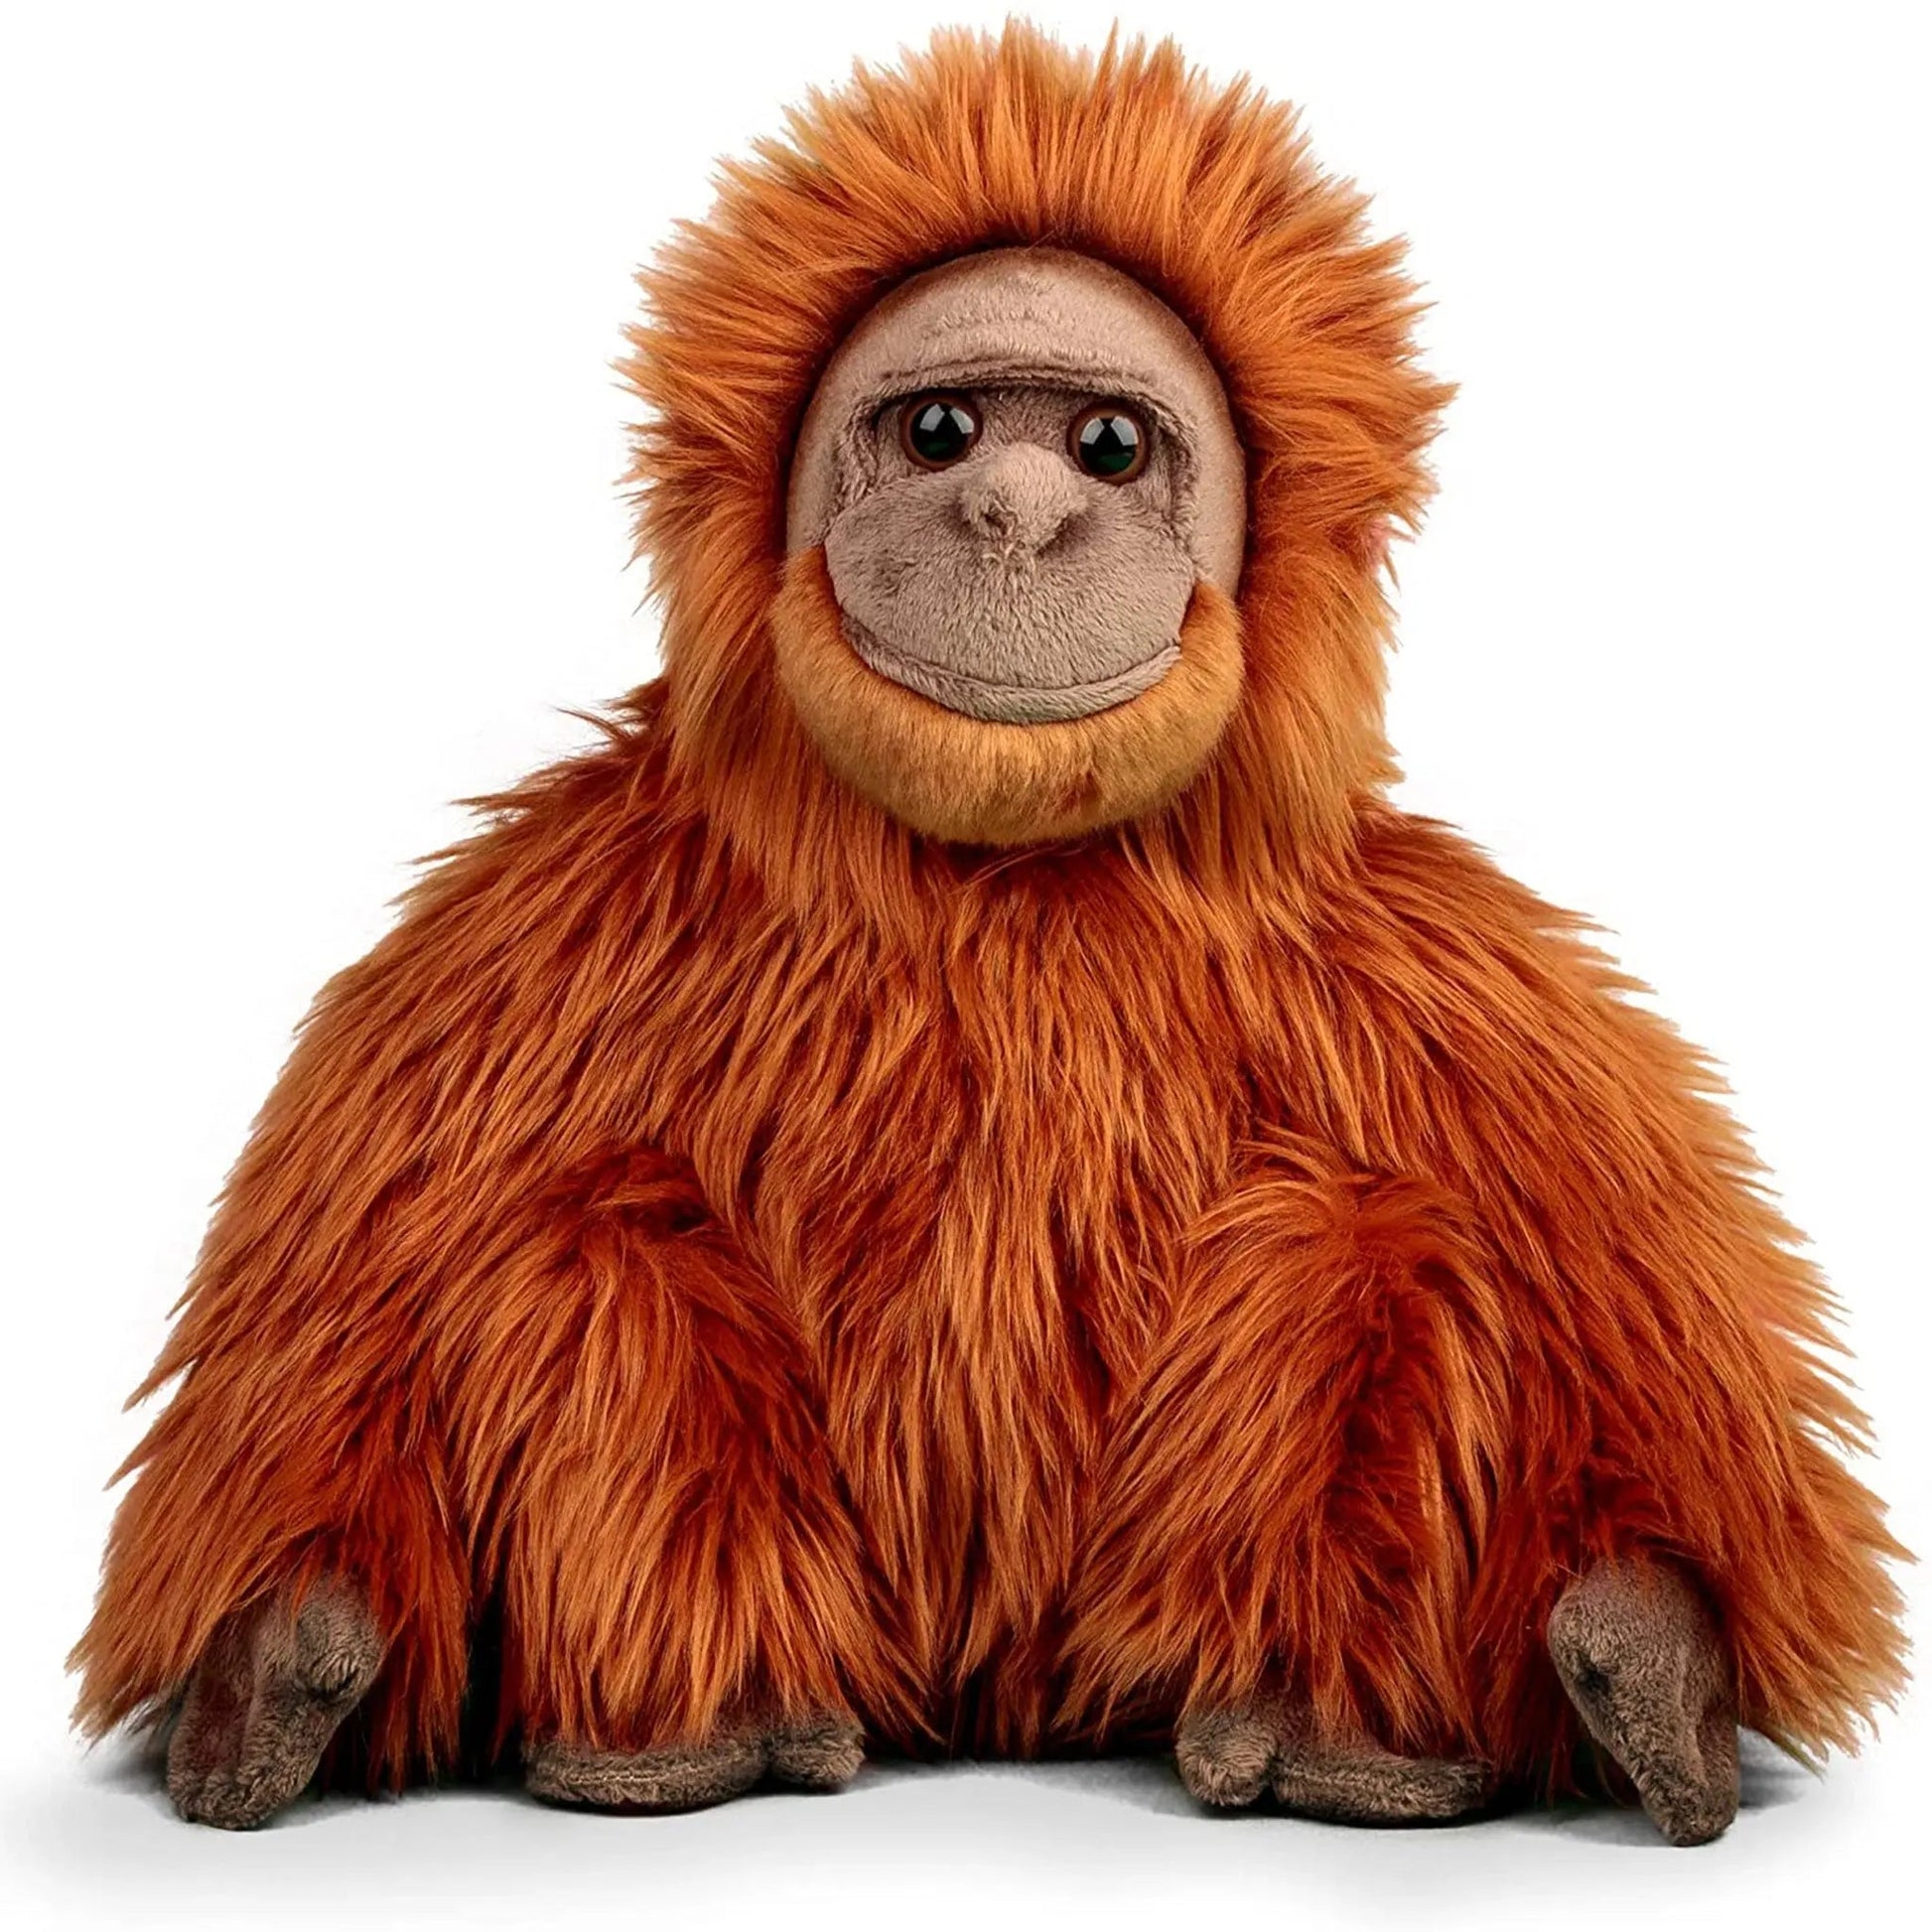 Animigos World of Nature - Orangutan - Tobar - The Forgotten Toy Shop